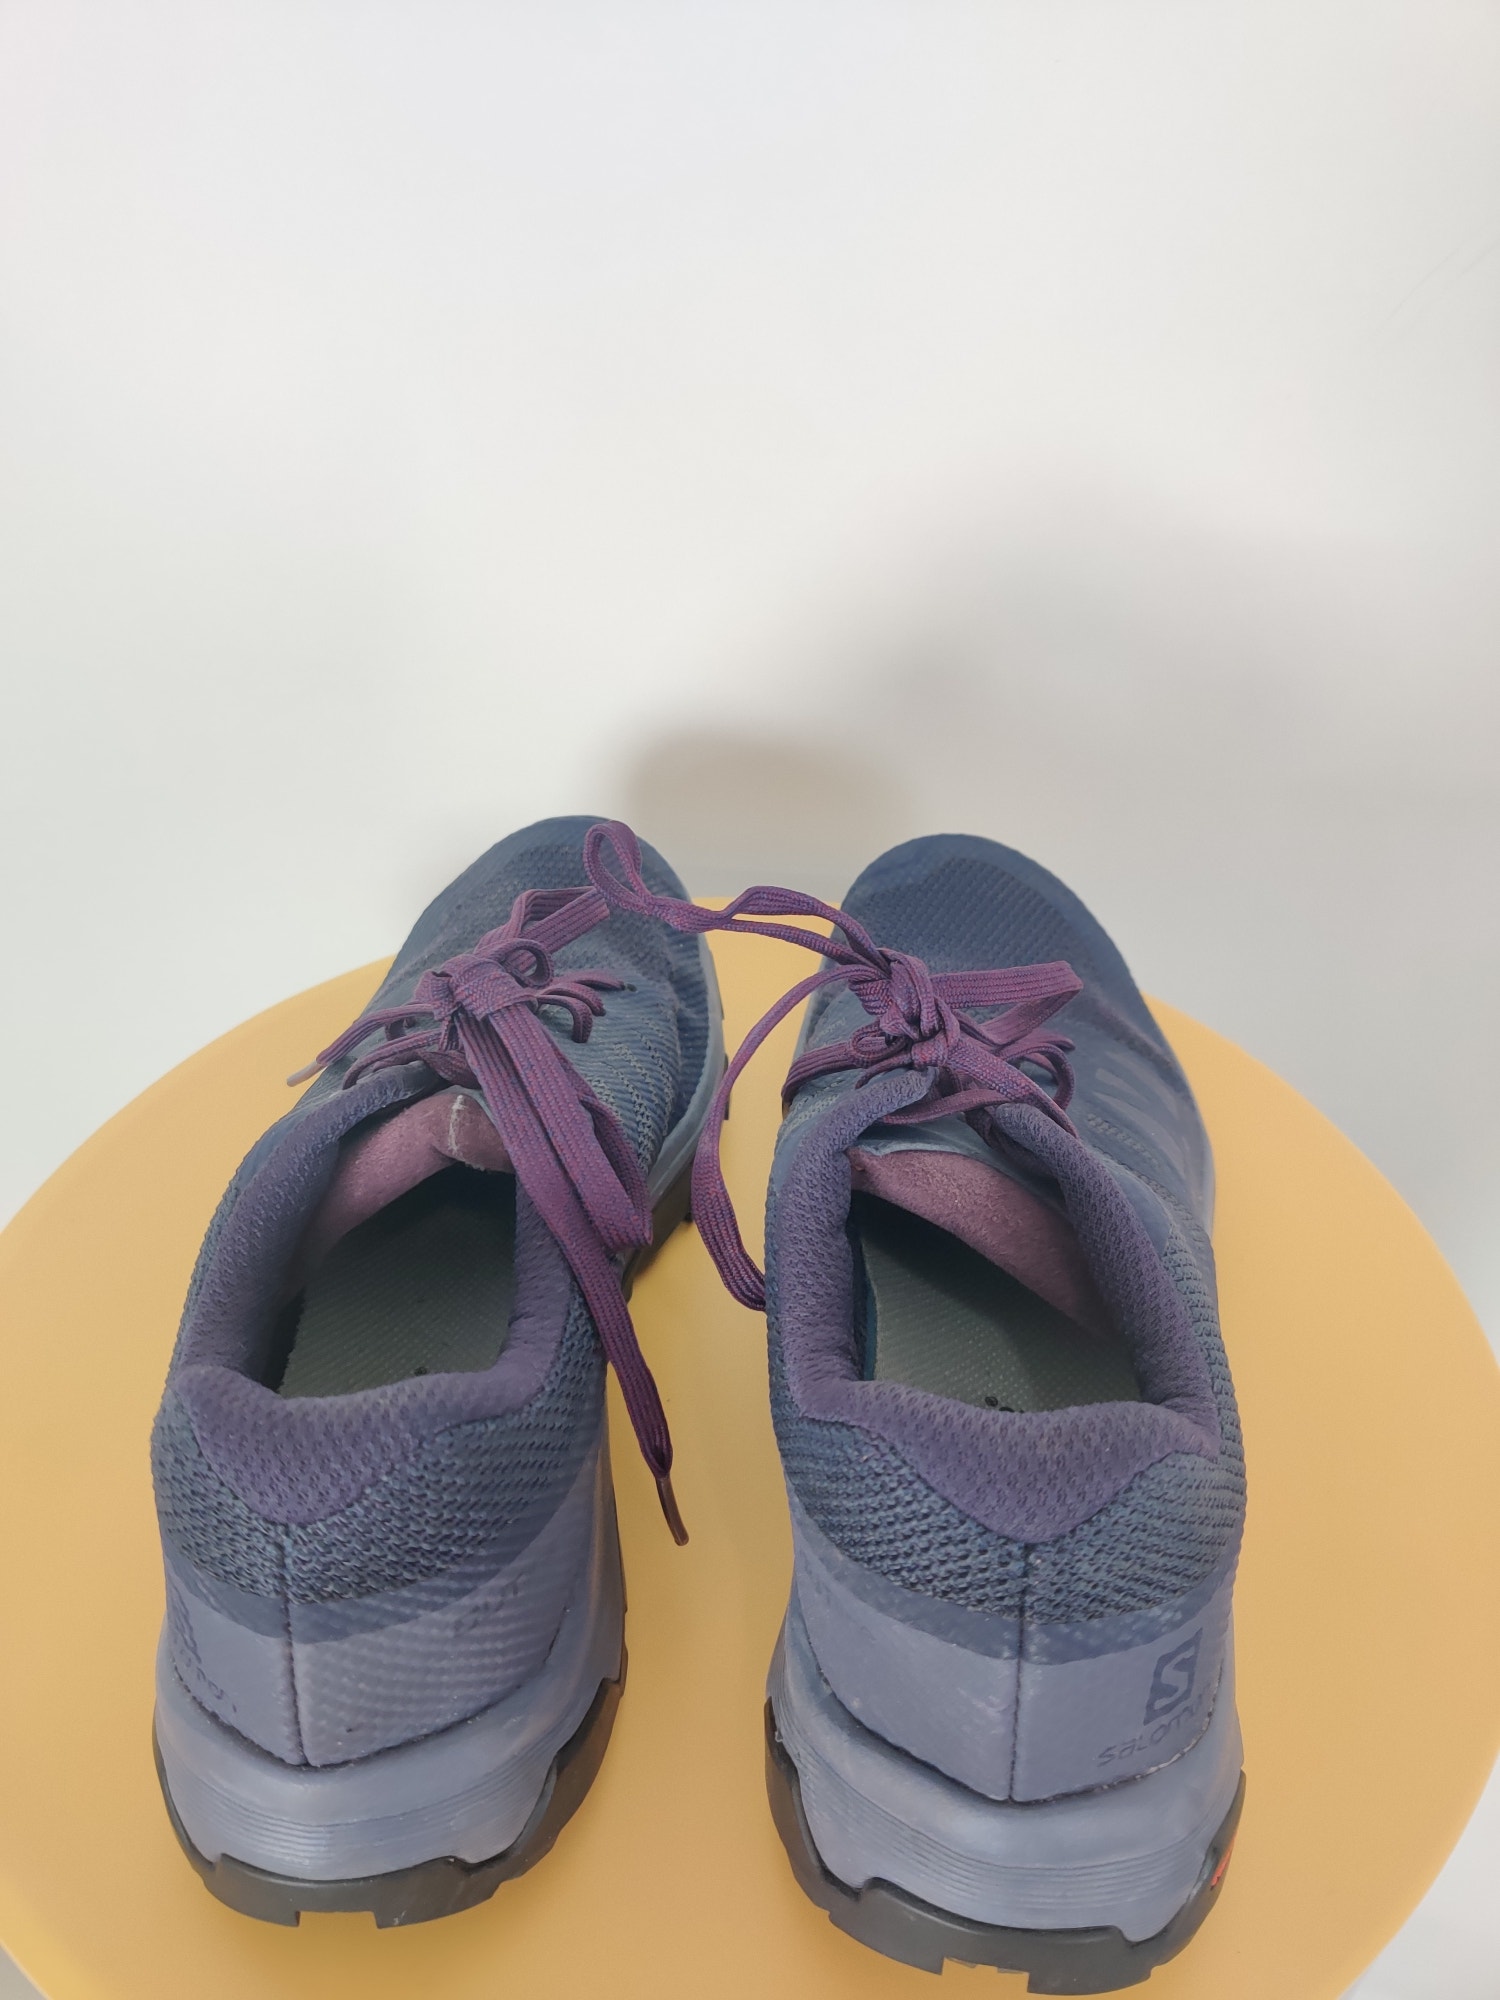 (V) Salomon Women shoes sandals hiking running sport purple contagrip sz 8 - Picture 4 of 12